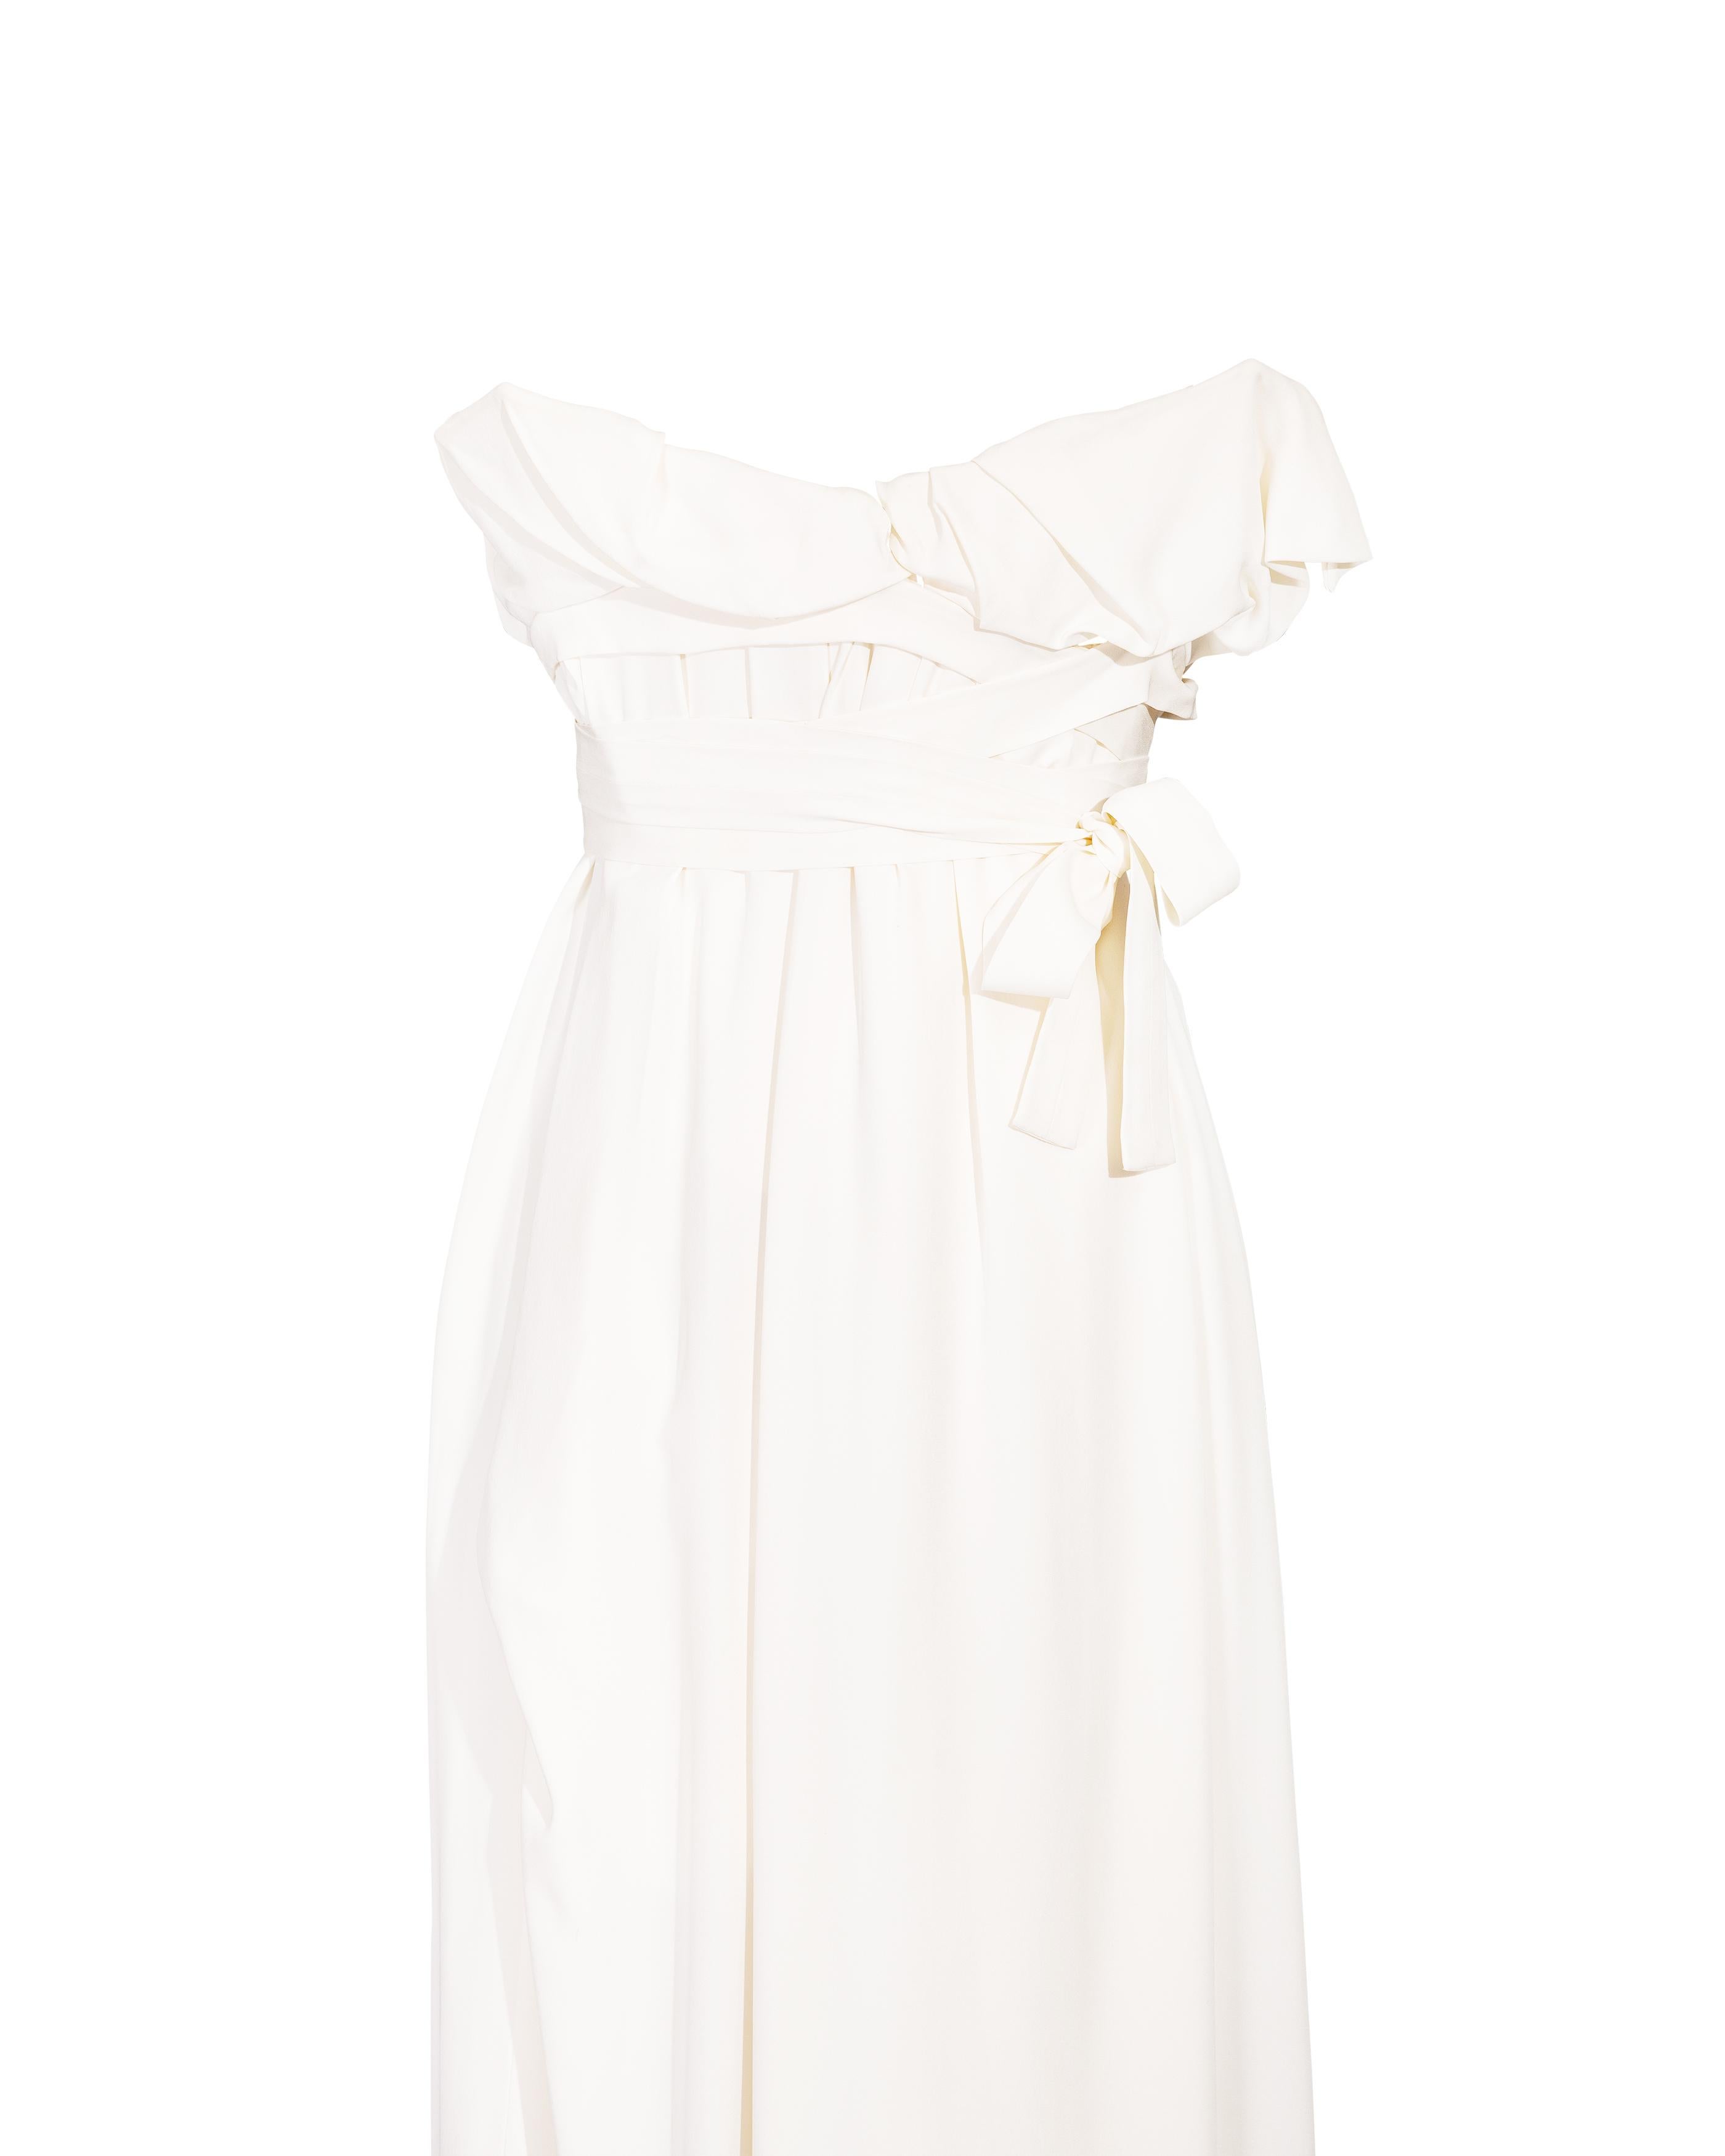 S/S 2014 Vivienne Westwood White Strapless Silk Drape Gown 2